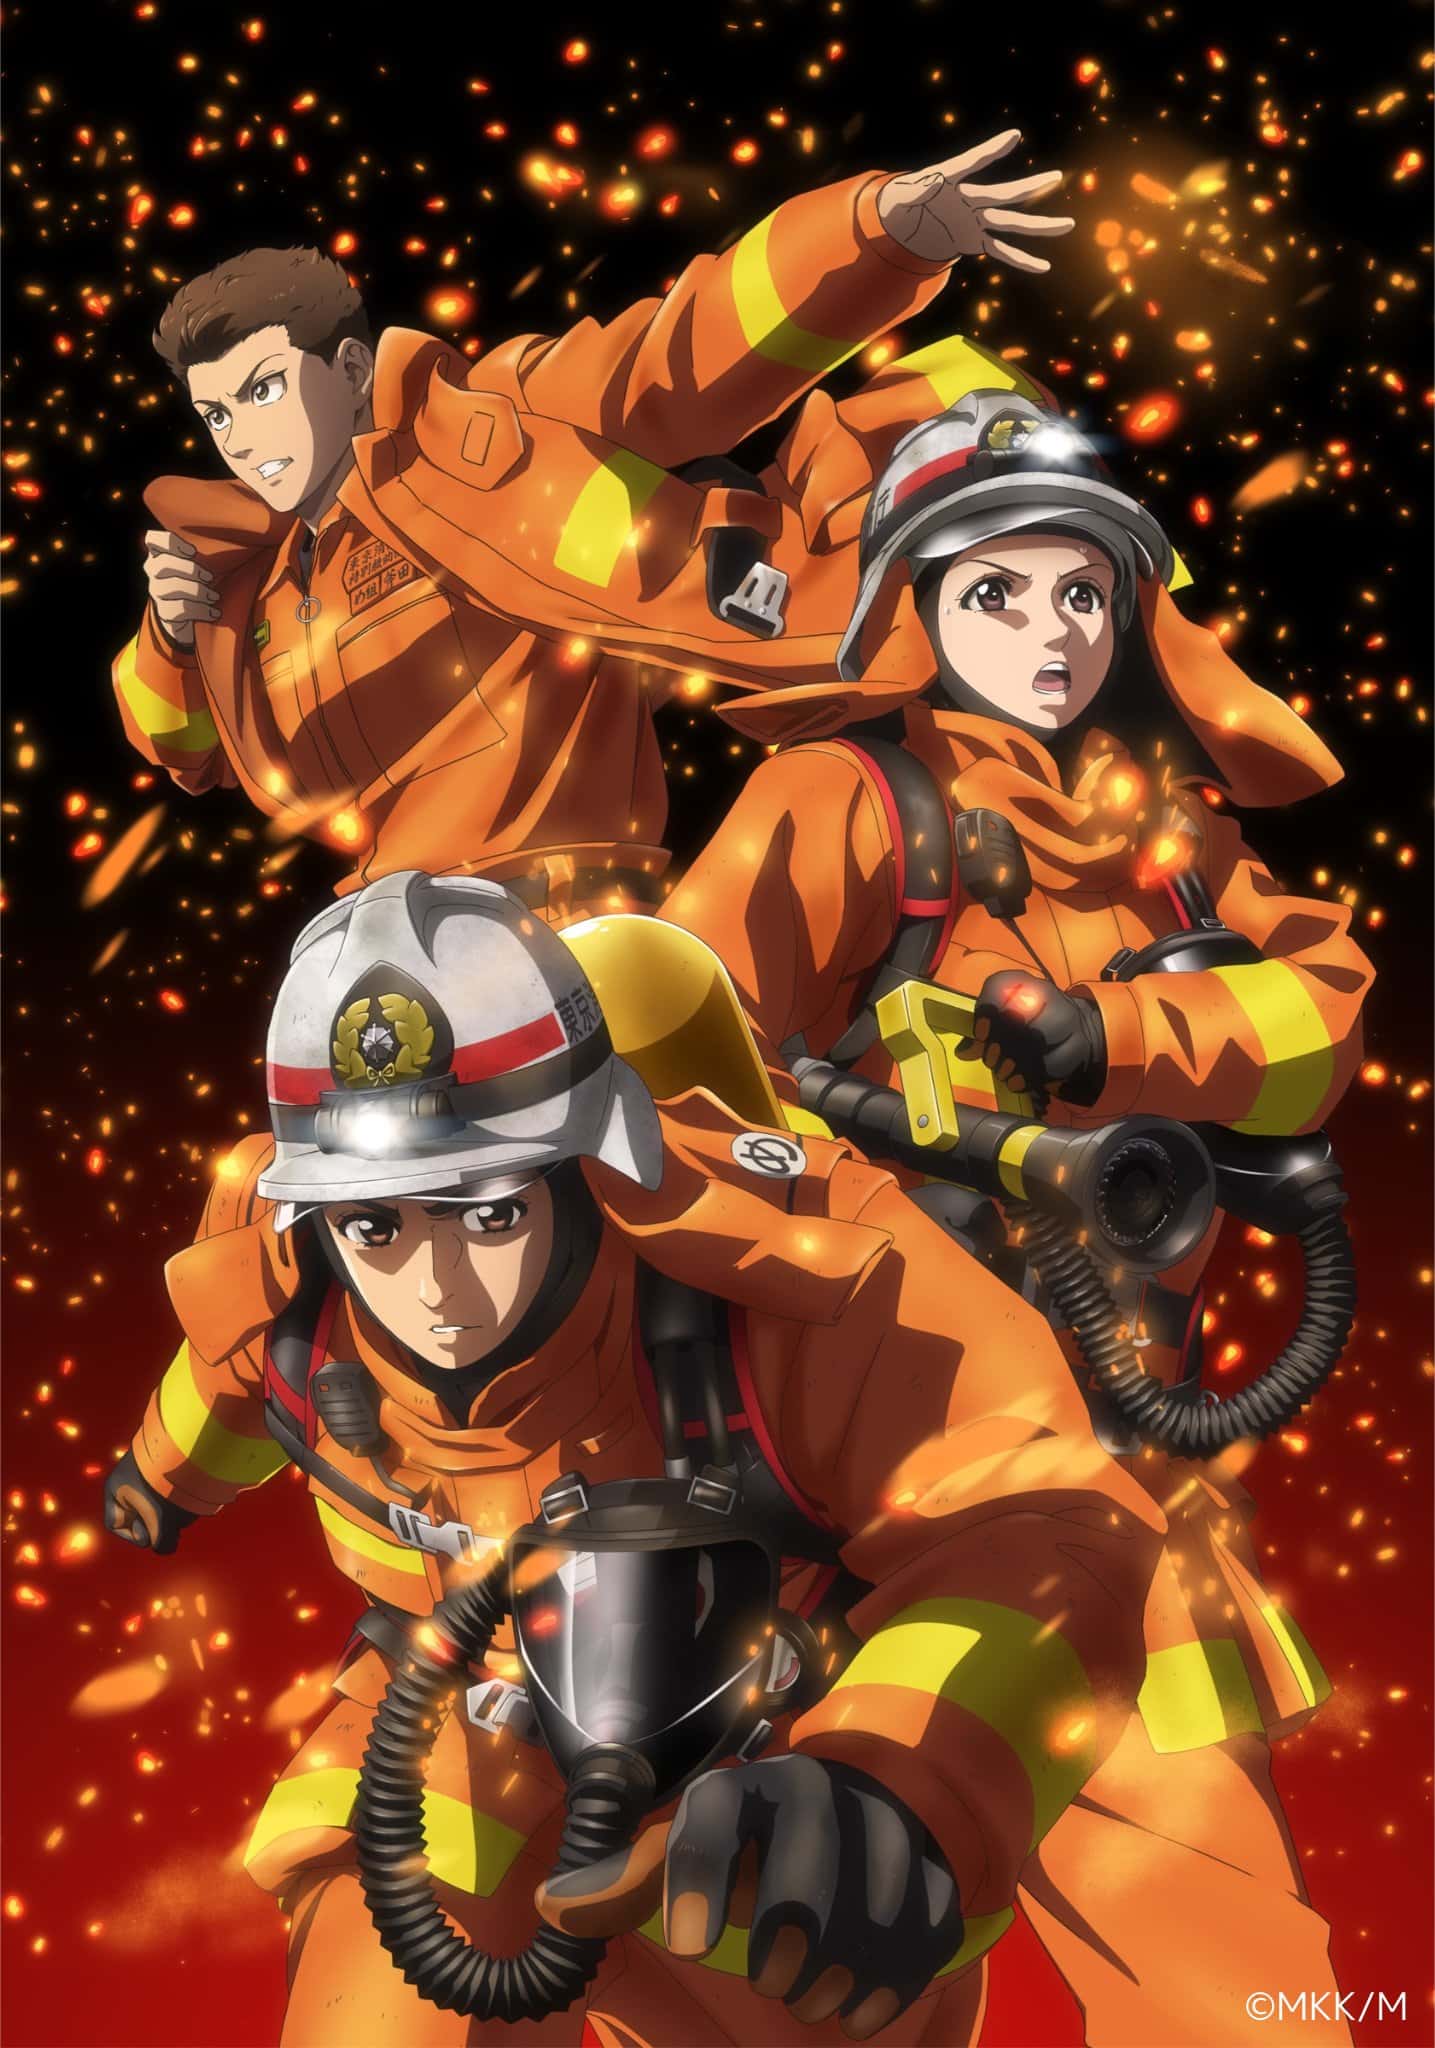 Second visuel pour lanime Firefighter Daigo : Rescuer in Orange